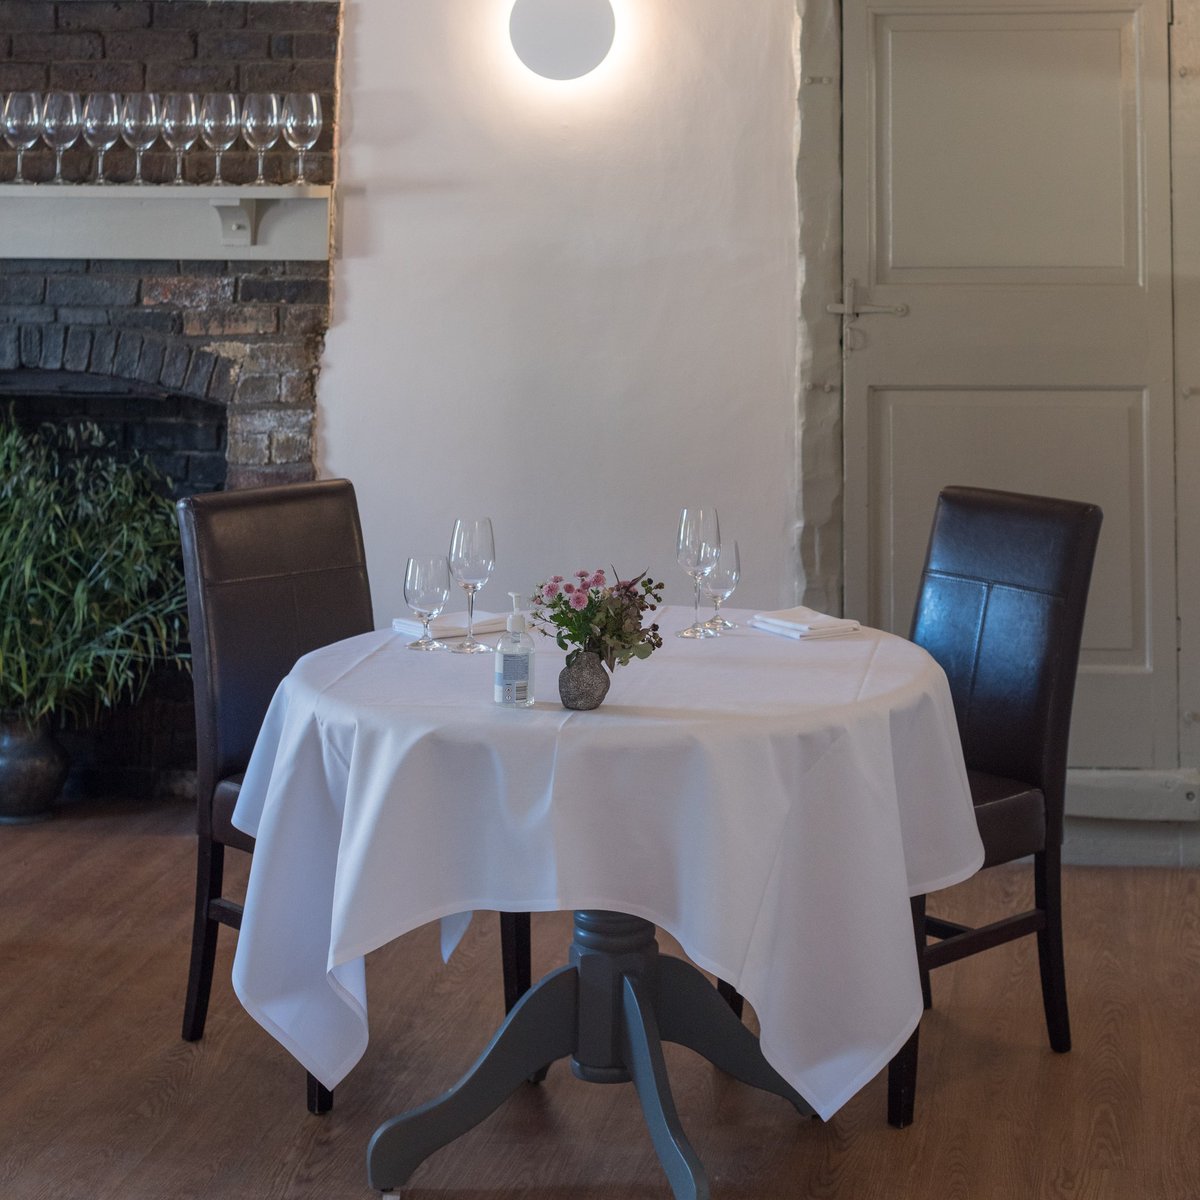 Table for 2? 

#tablefortwo #reservation #datenight #matenight #lunch #dinner #cheers #markpoynton #fenditton #cambridge